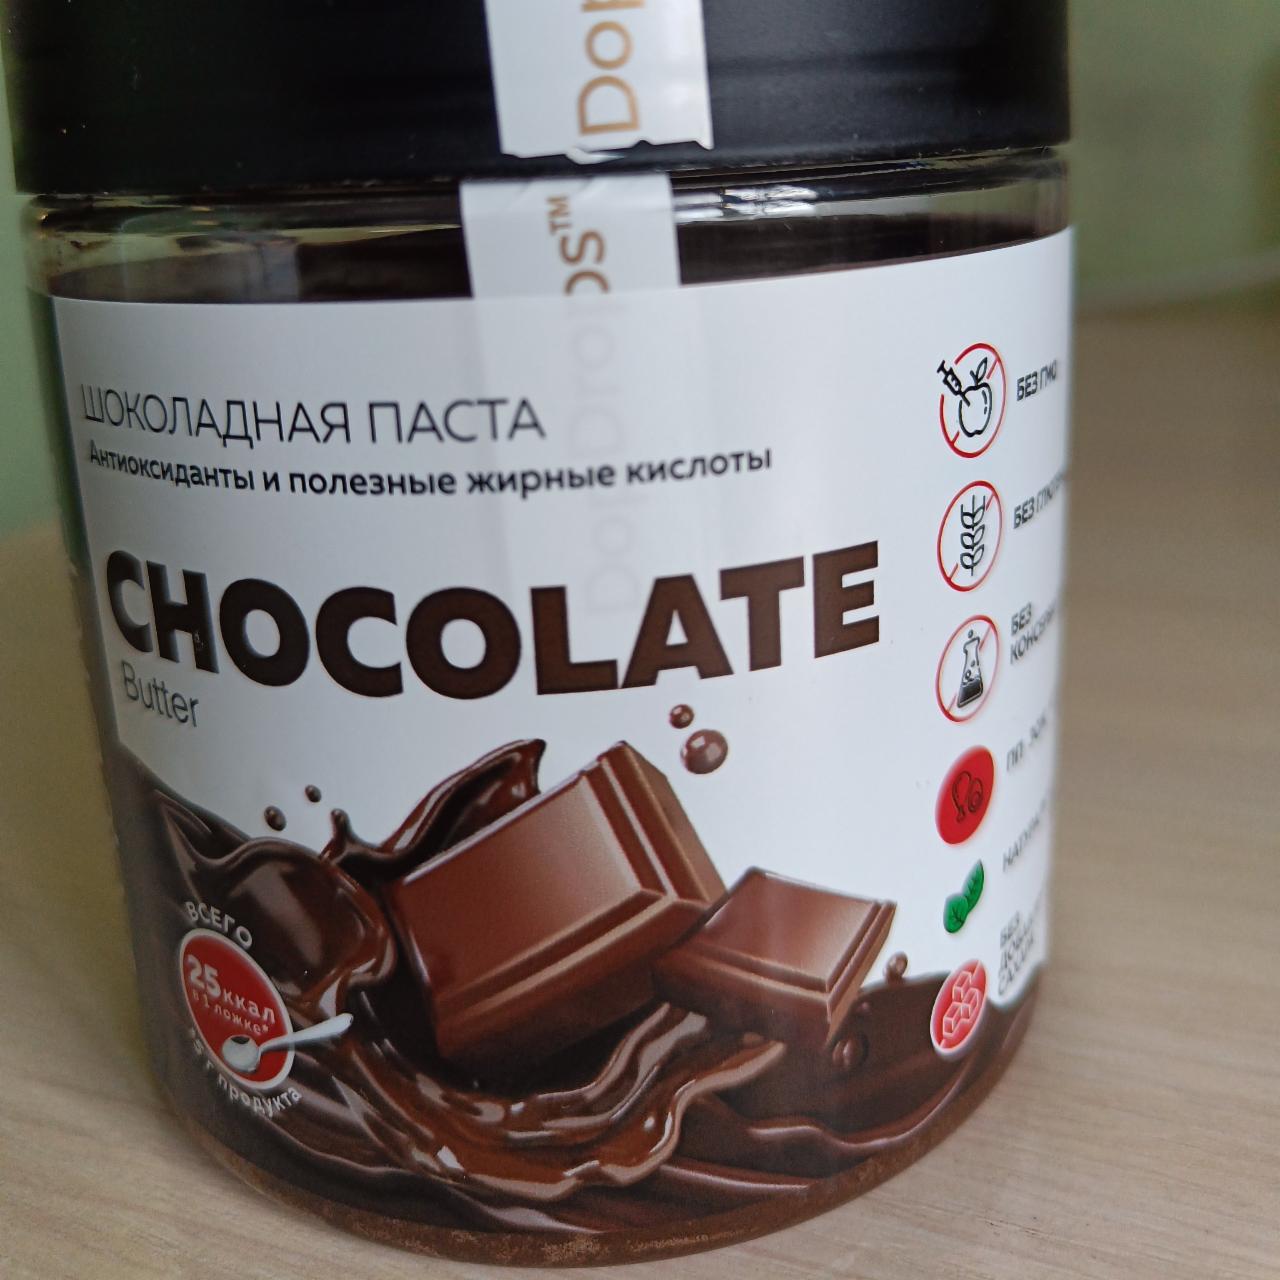 Фото - Шоколадная паста Chocolate butter DopDrops